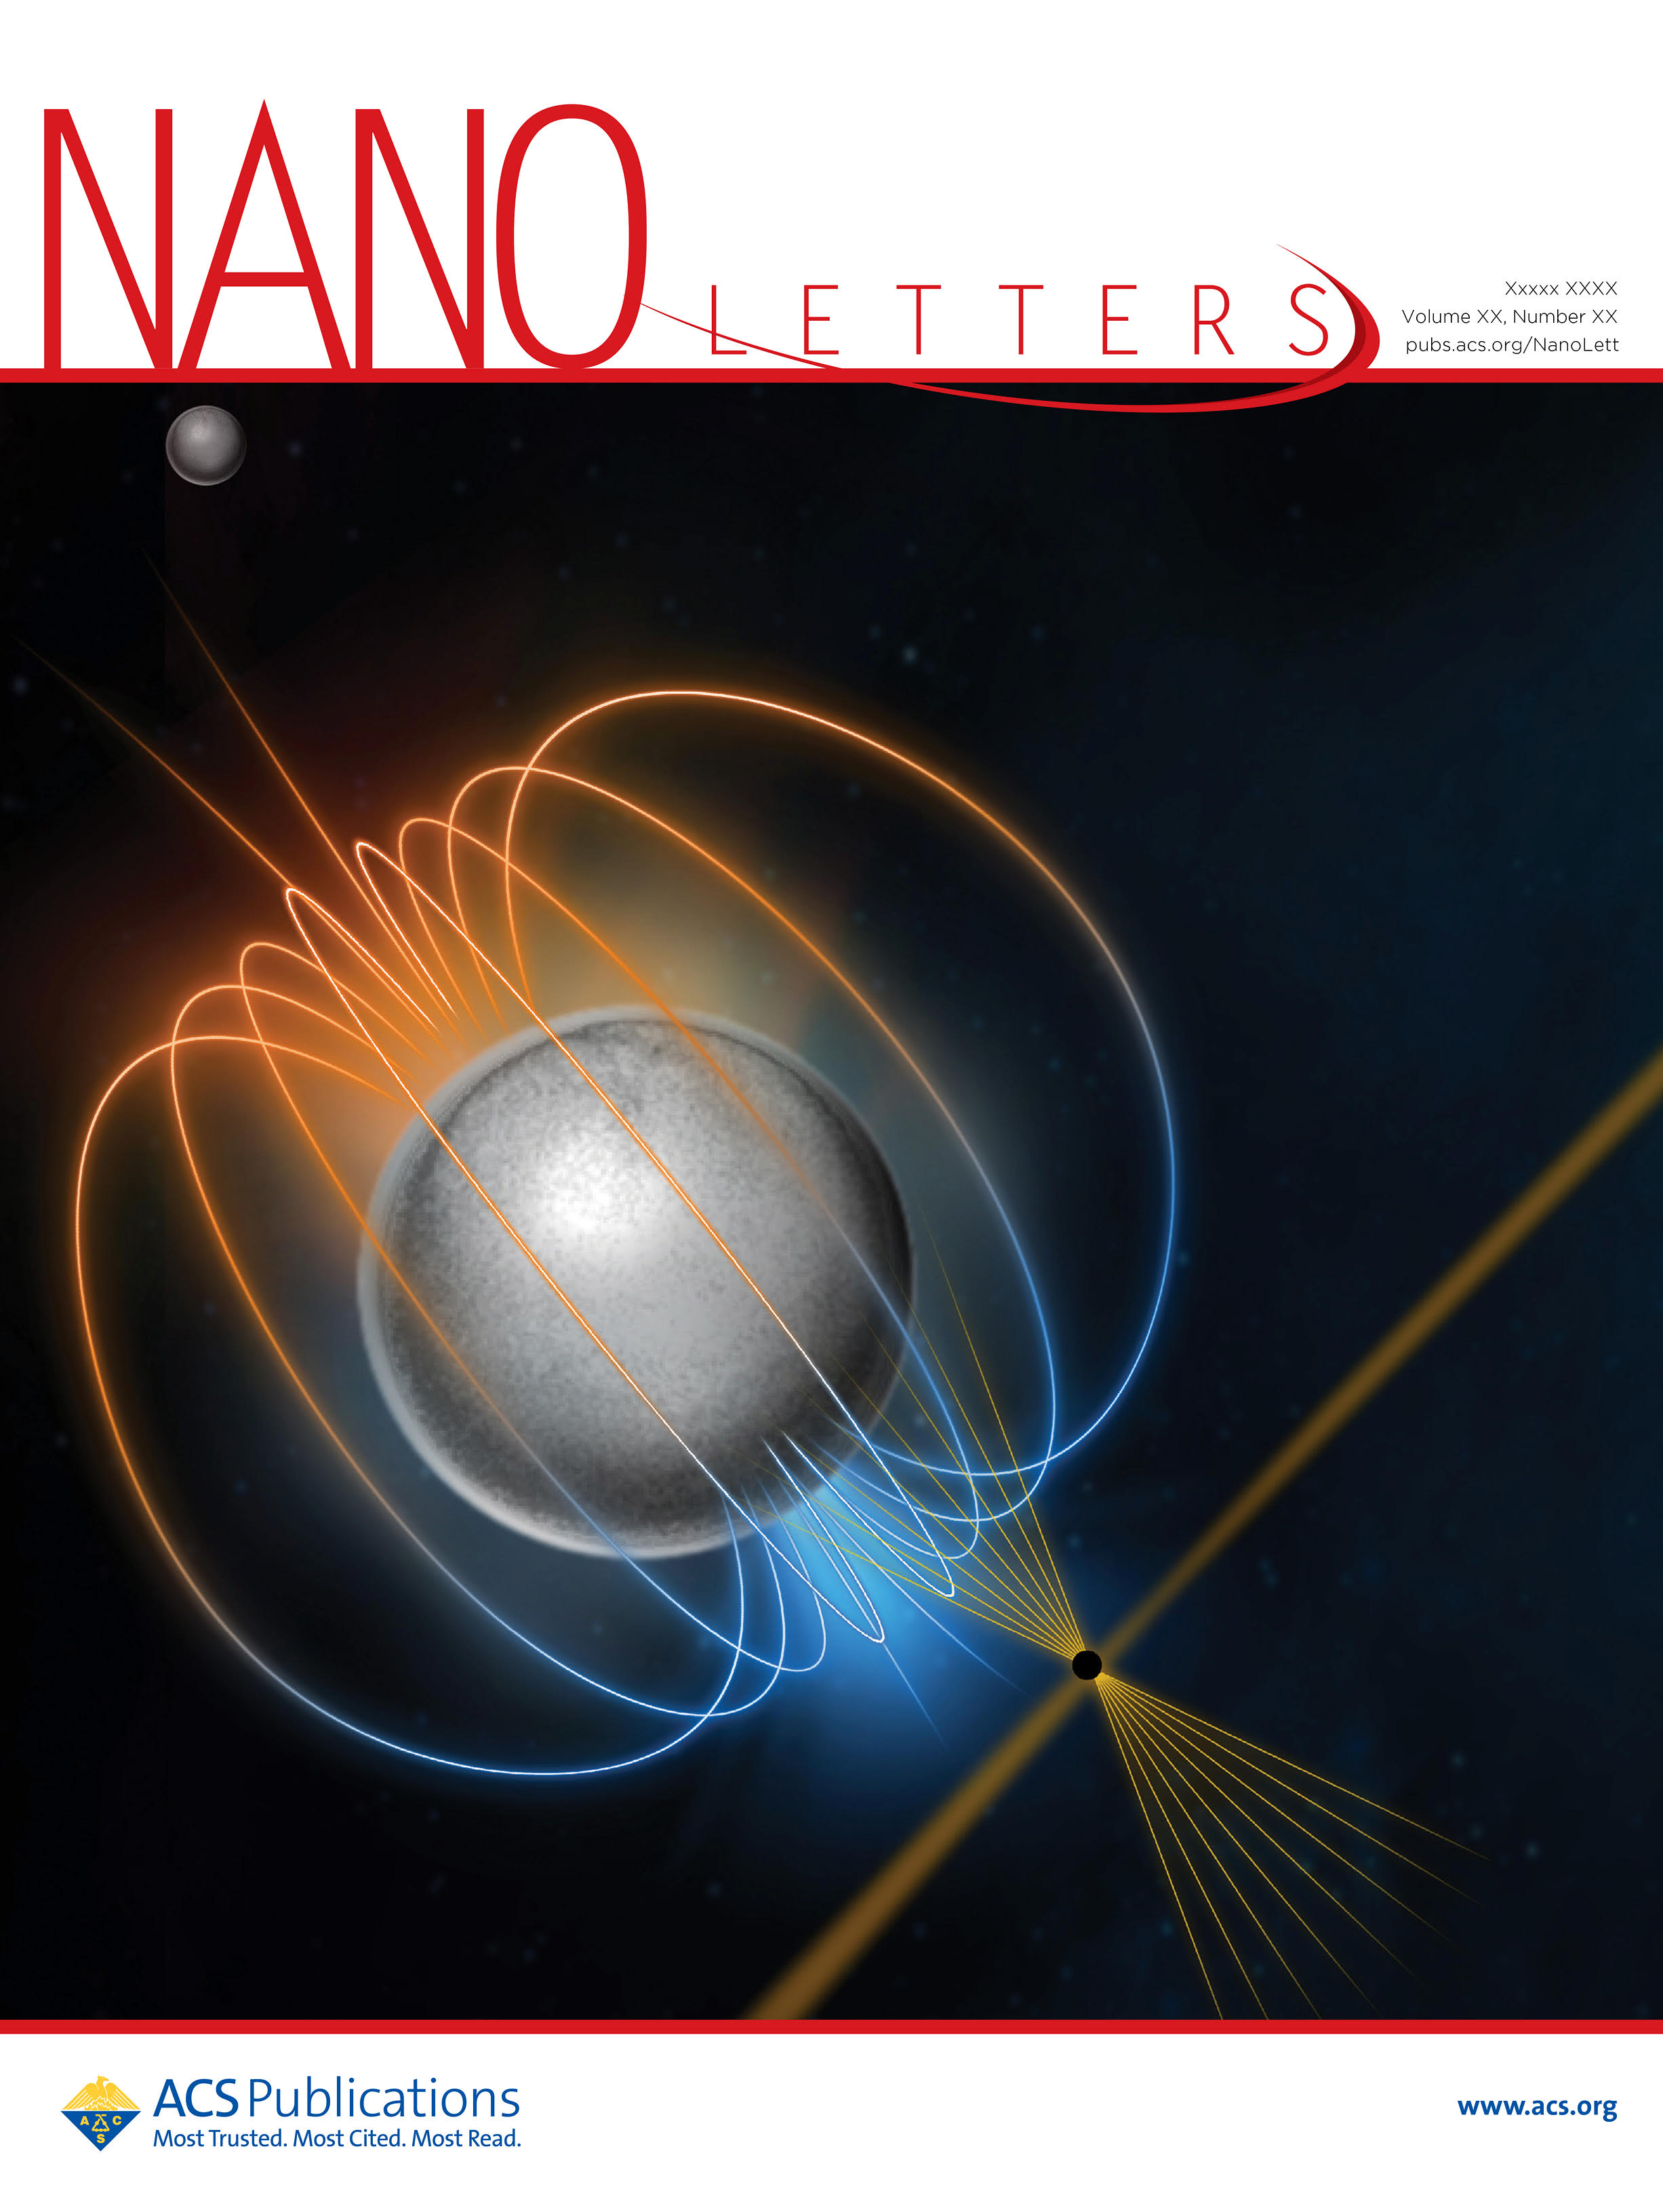 Electron Beam Infrared Nano-Ellipsometry of Individual Indium Tin Oxide Nanocrystals